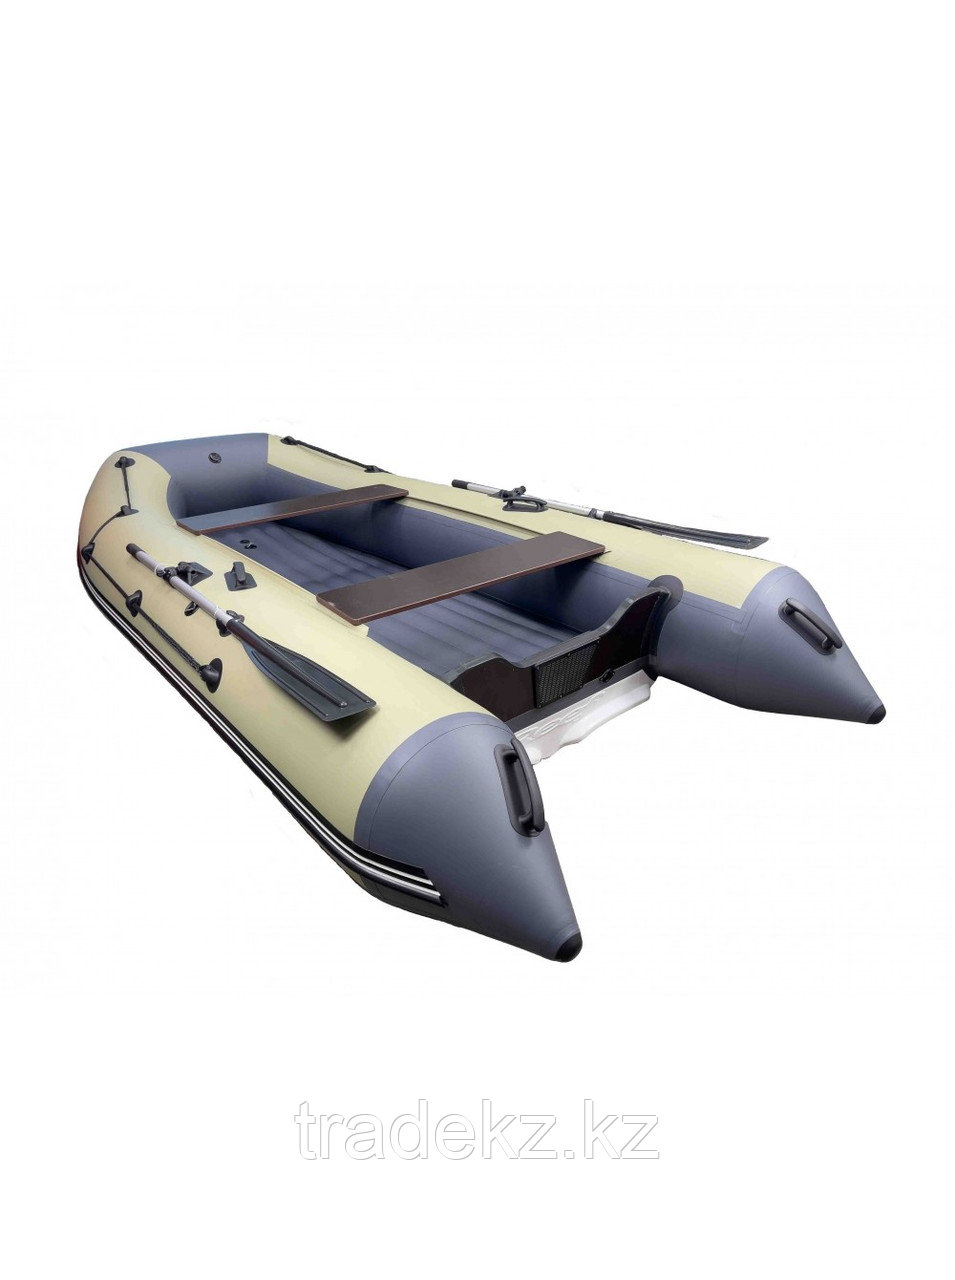 Лодка REEF-360 НД светло-серый/синий